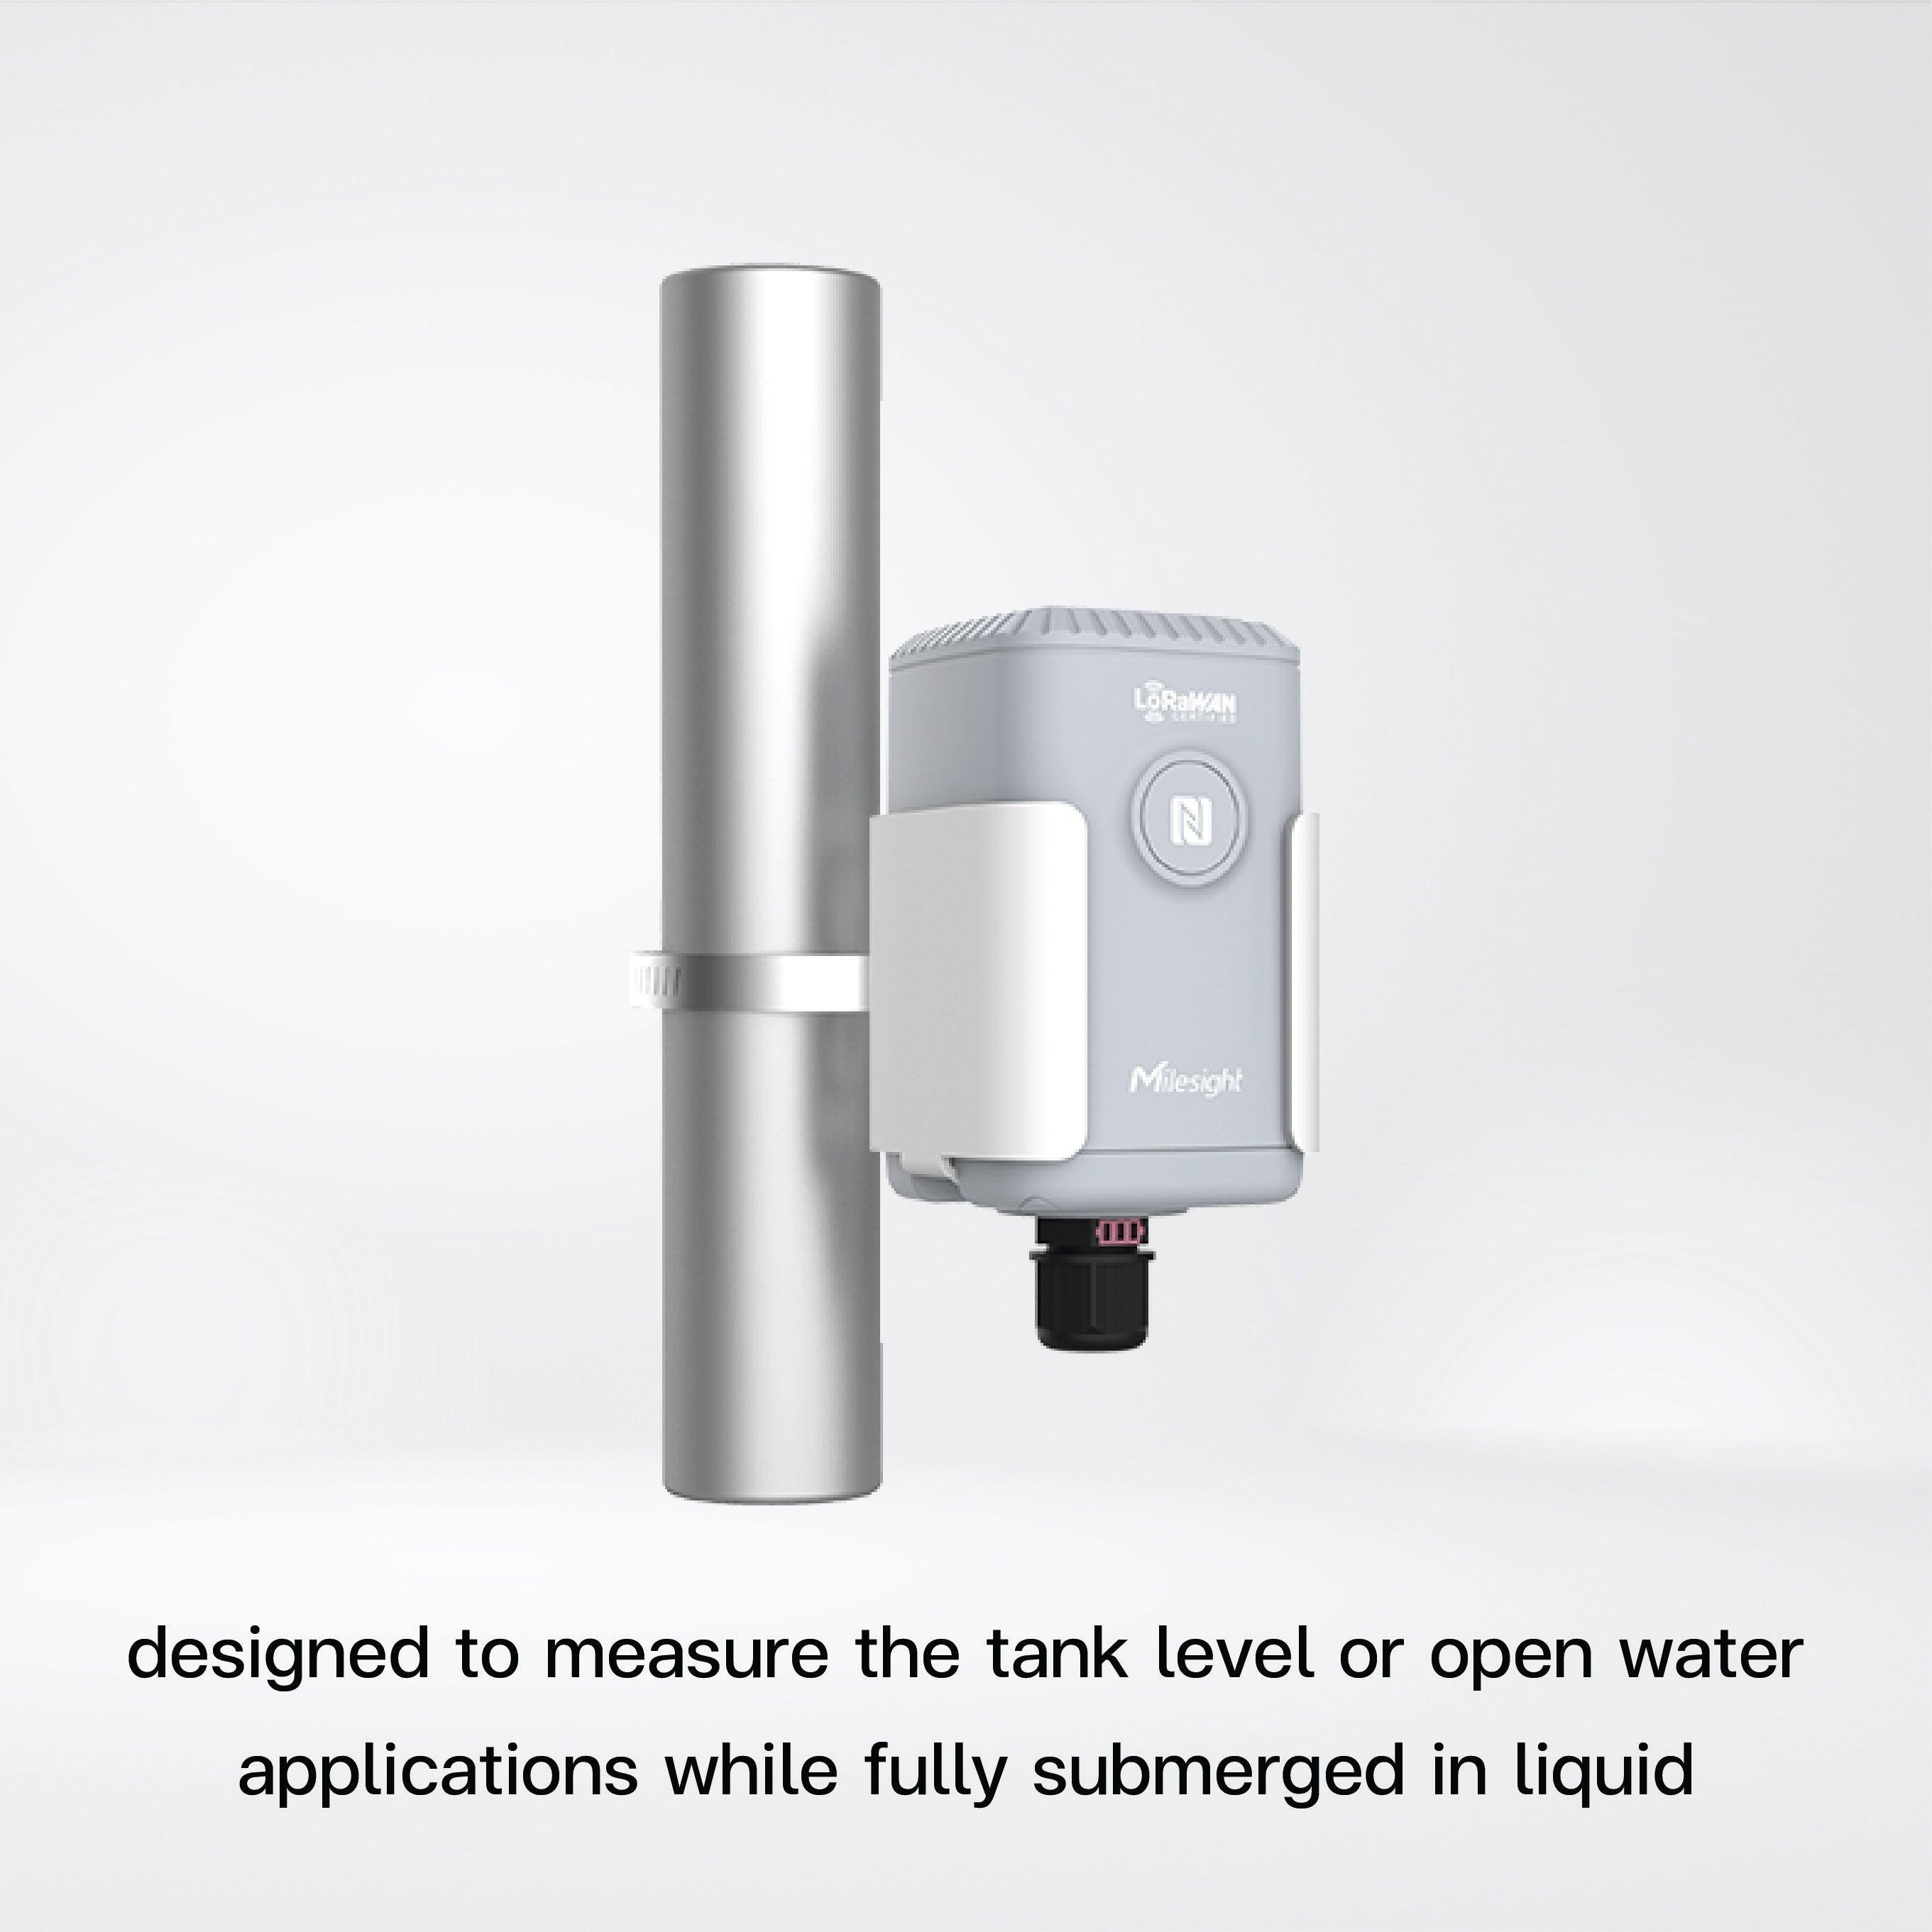 EM500-SWL-L003 Submersible Water Level Sensor/ 3m - Riverplus